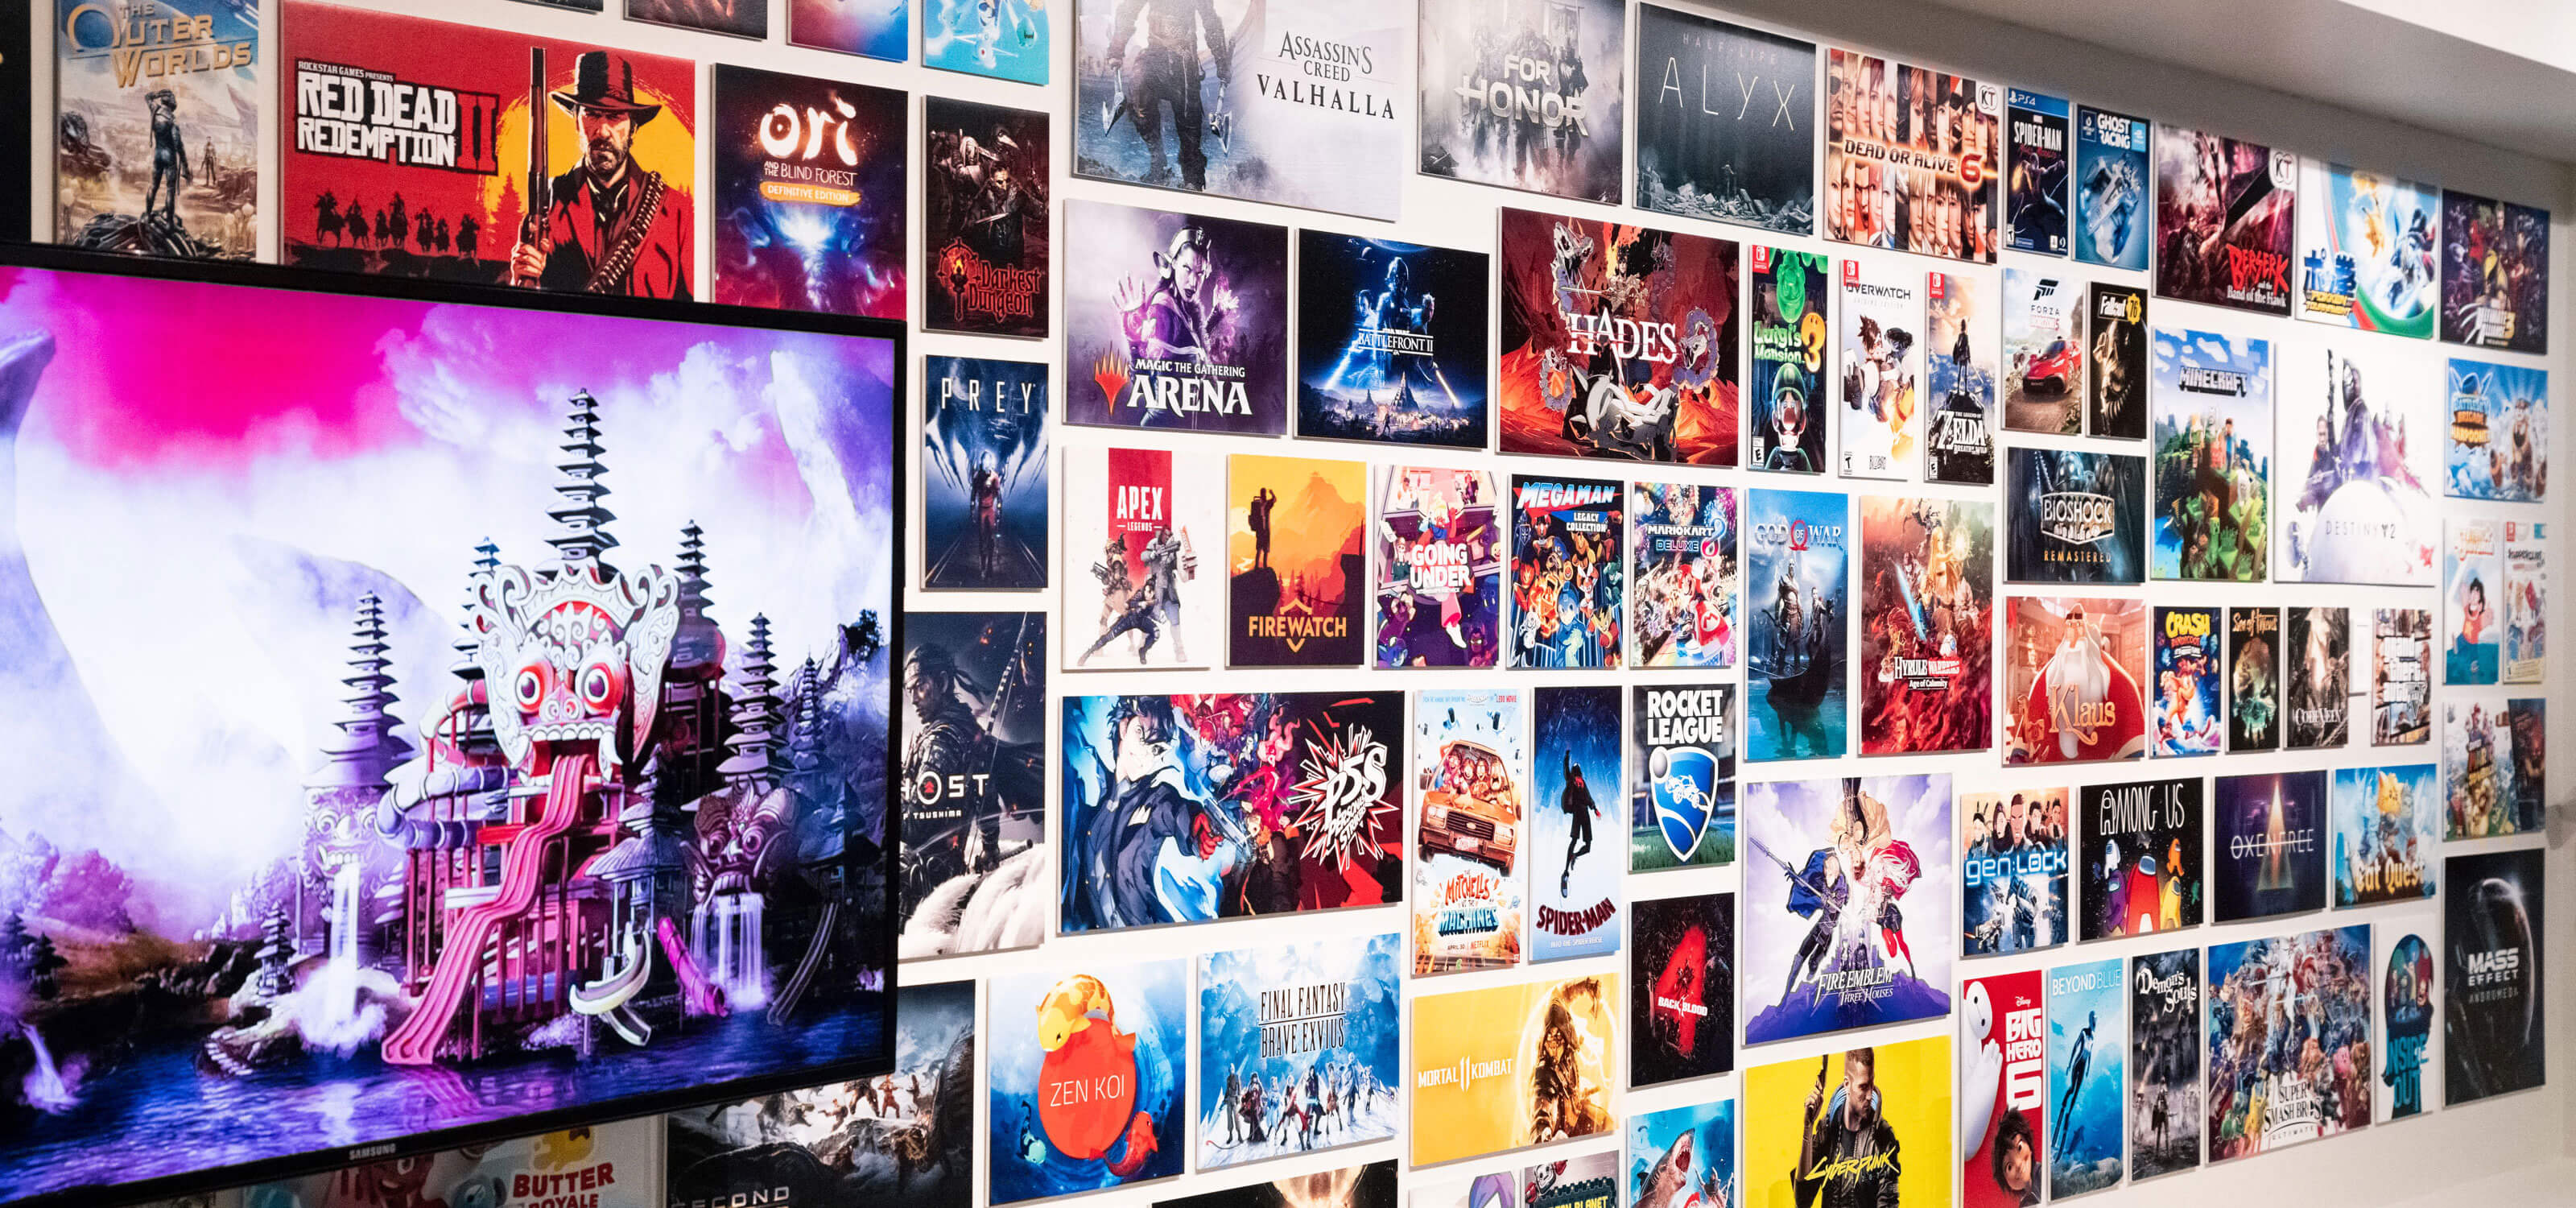 Valve's Dota 2 Free To Play Documentary To Be Shown On Astro